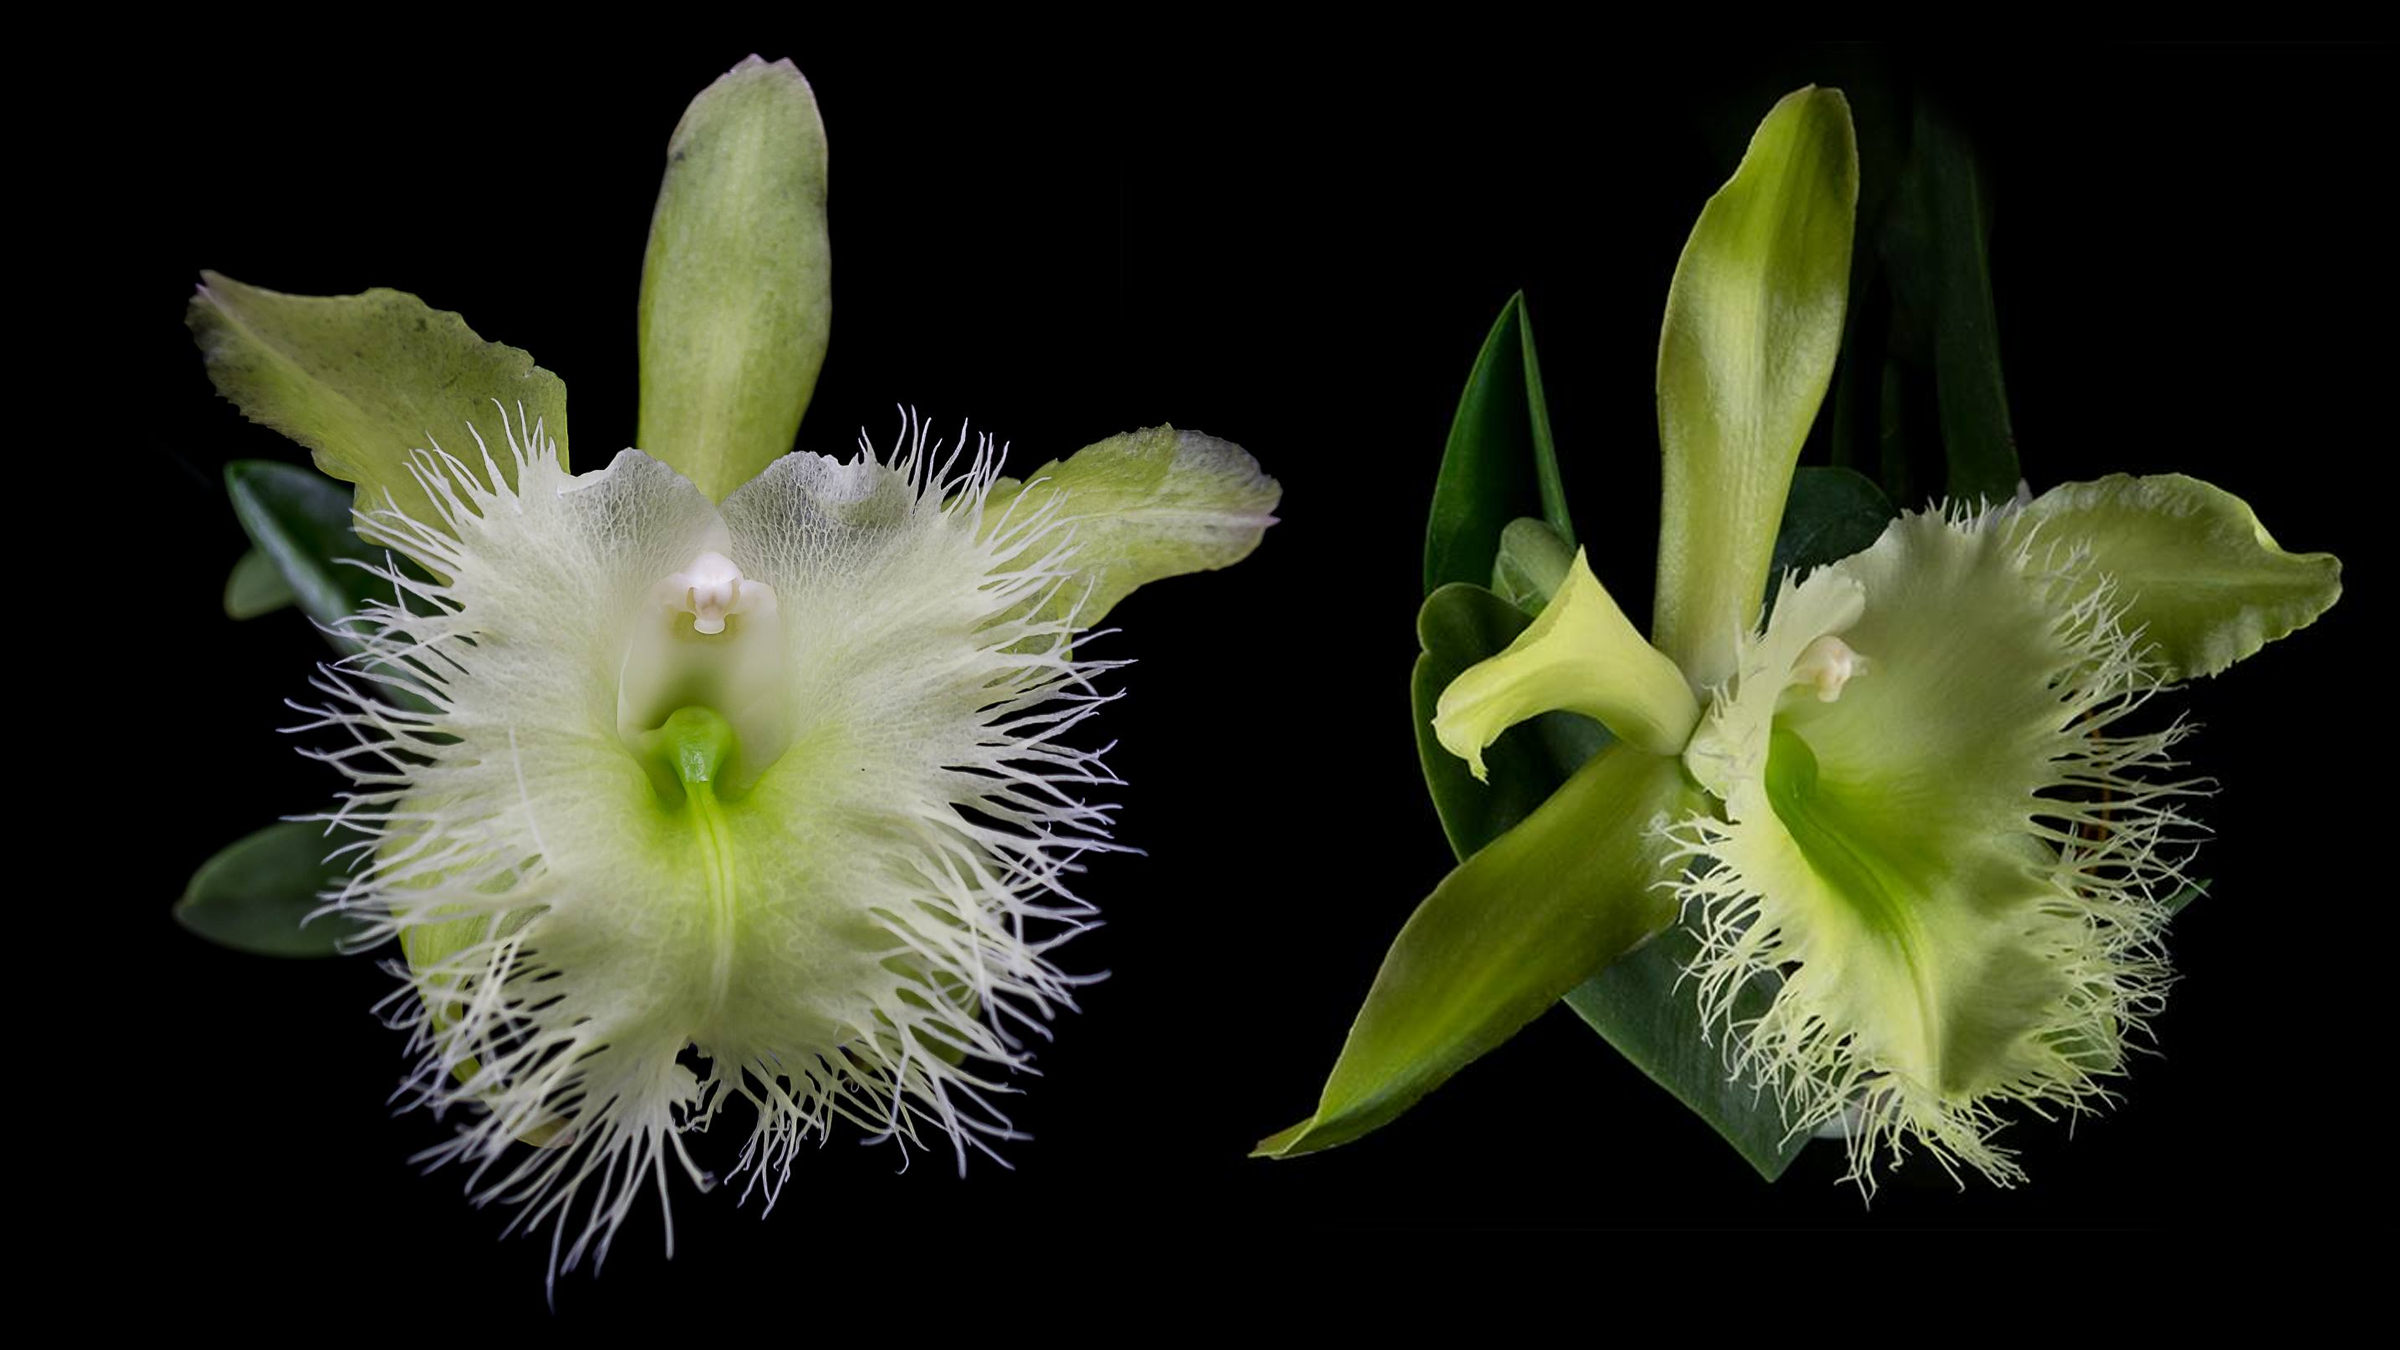 The Orchid Rhyncholaelia Digbyana - National Flower of Honduras